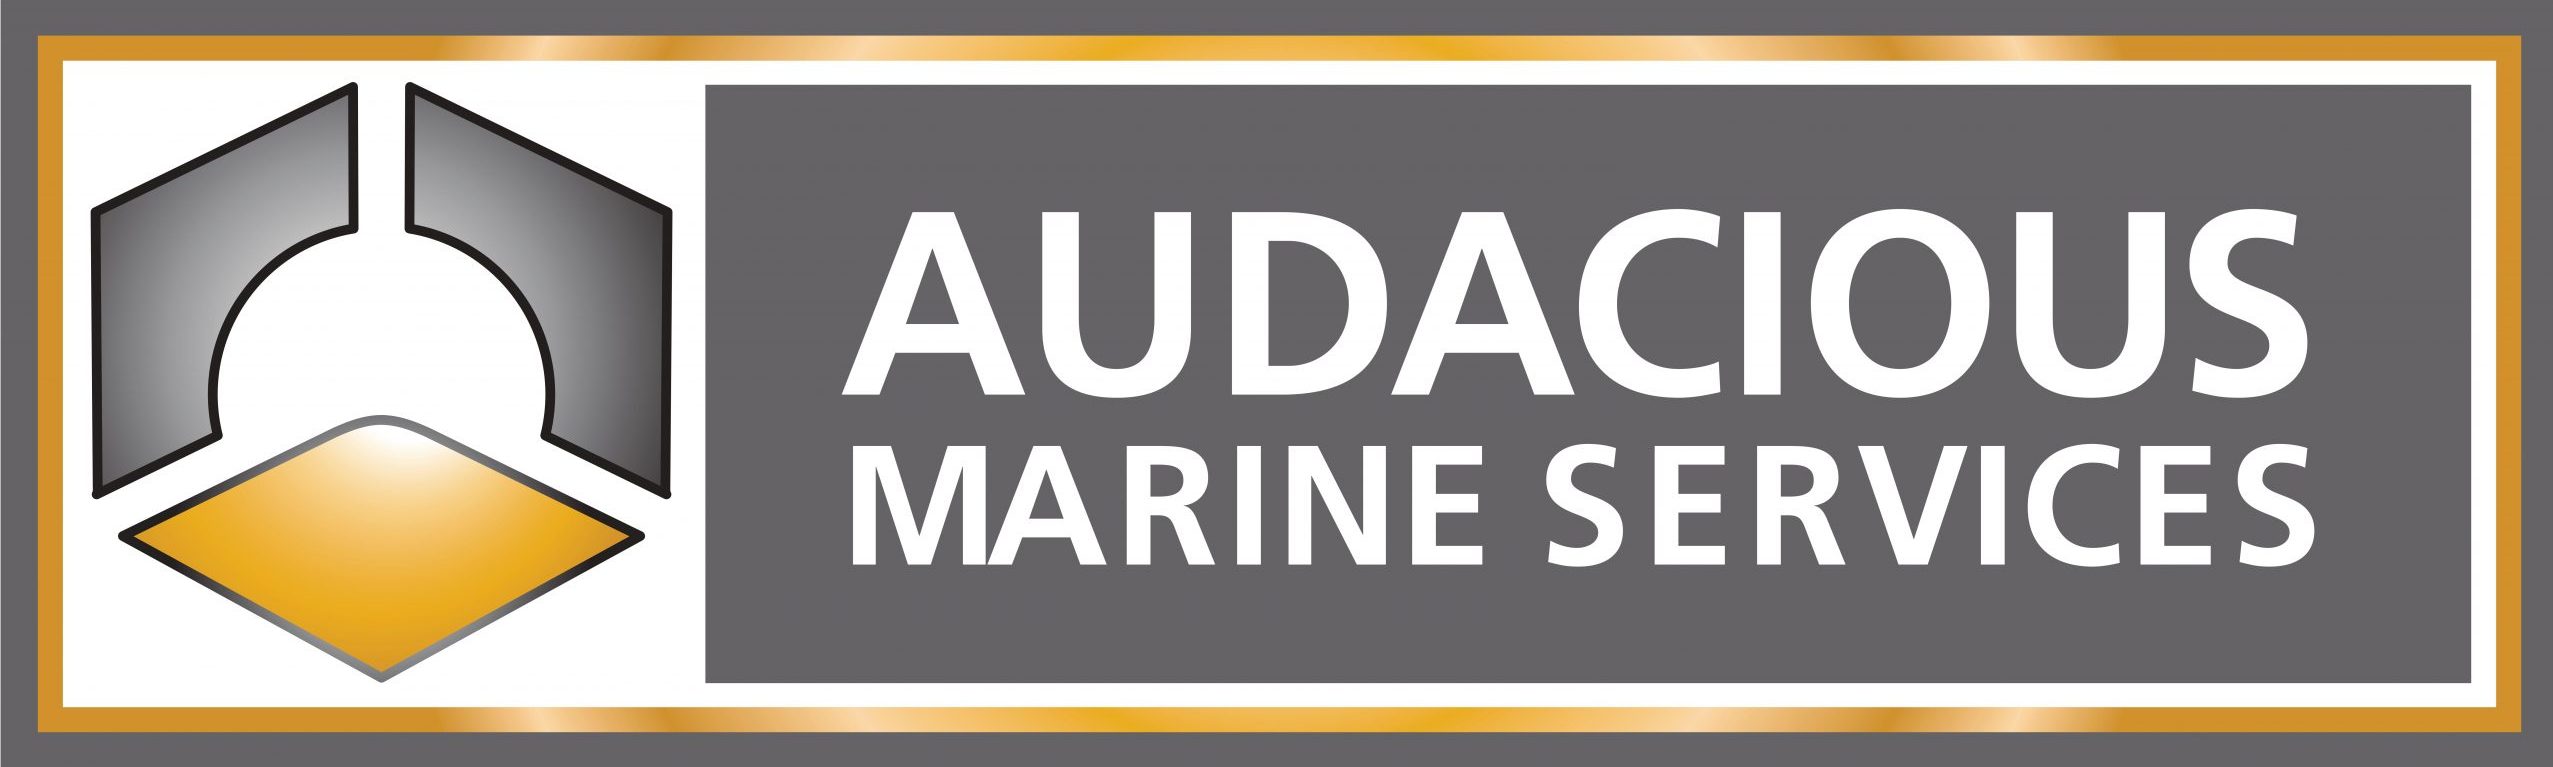 Audacious Marine Services